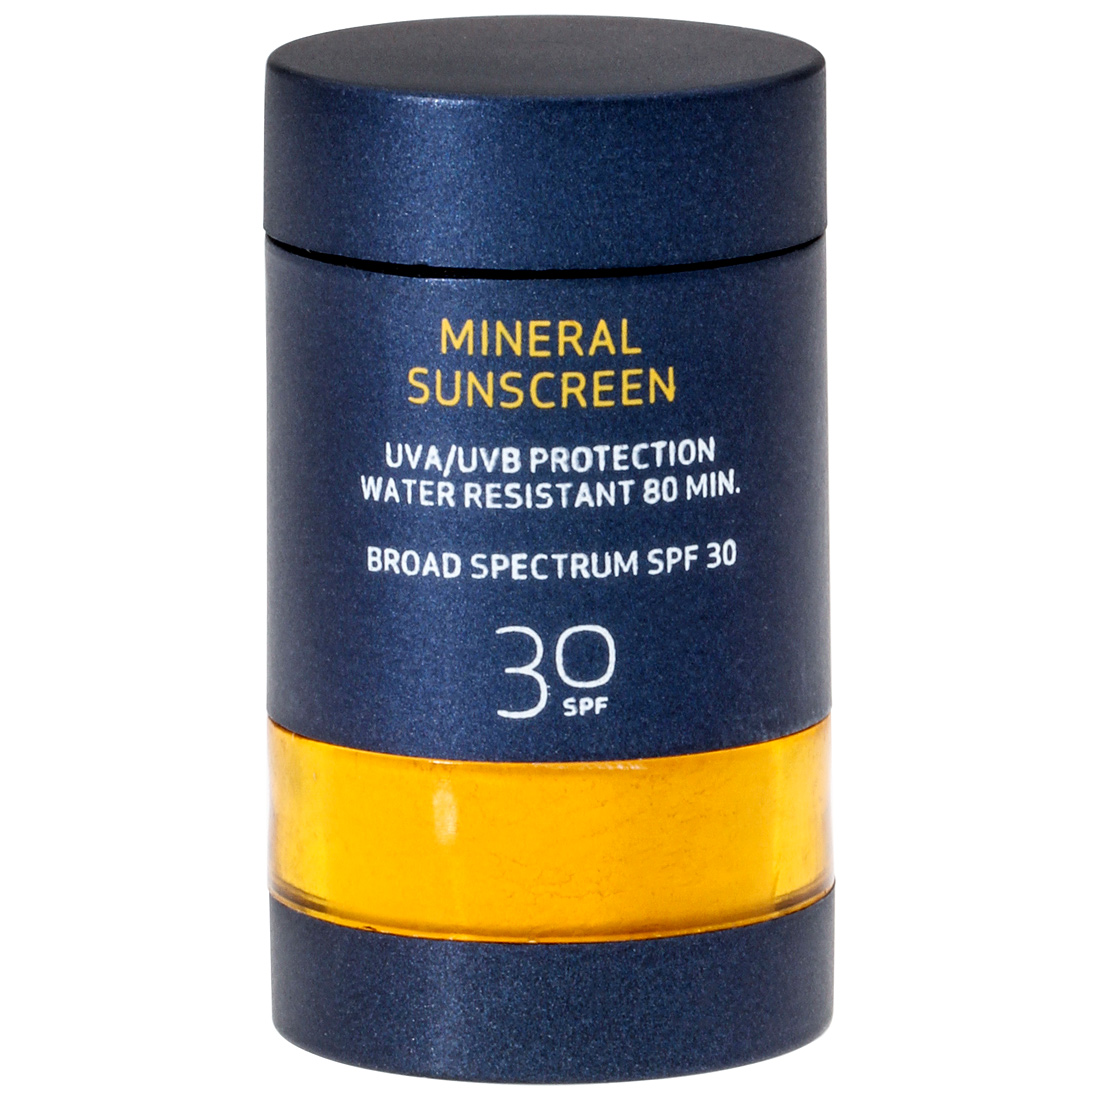 brush on block mineral powder sunscreen reviews